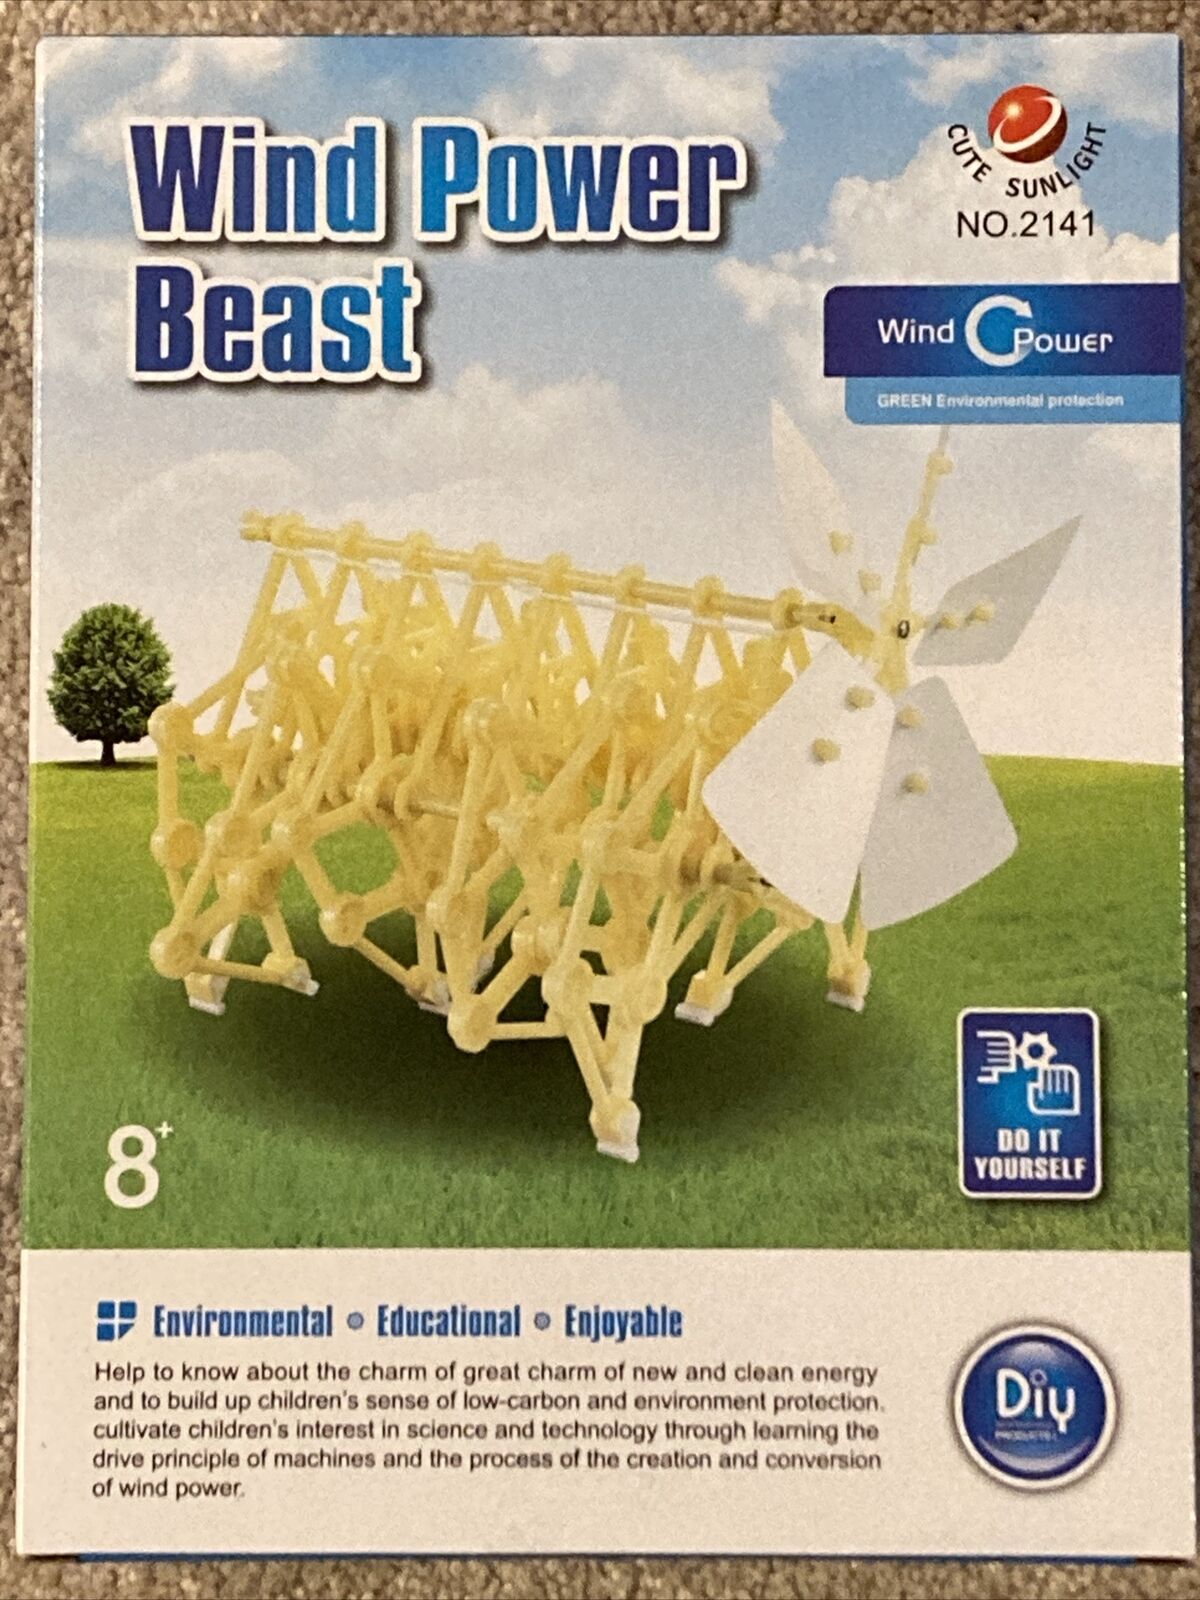 Wind Power Beast Mini Strandbeest Model Kit